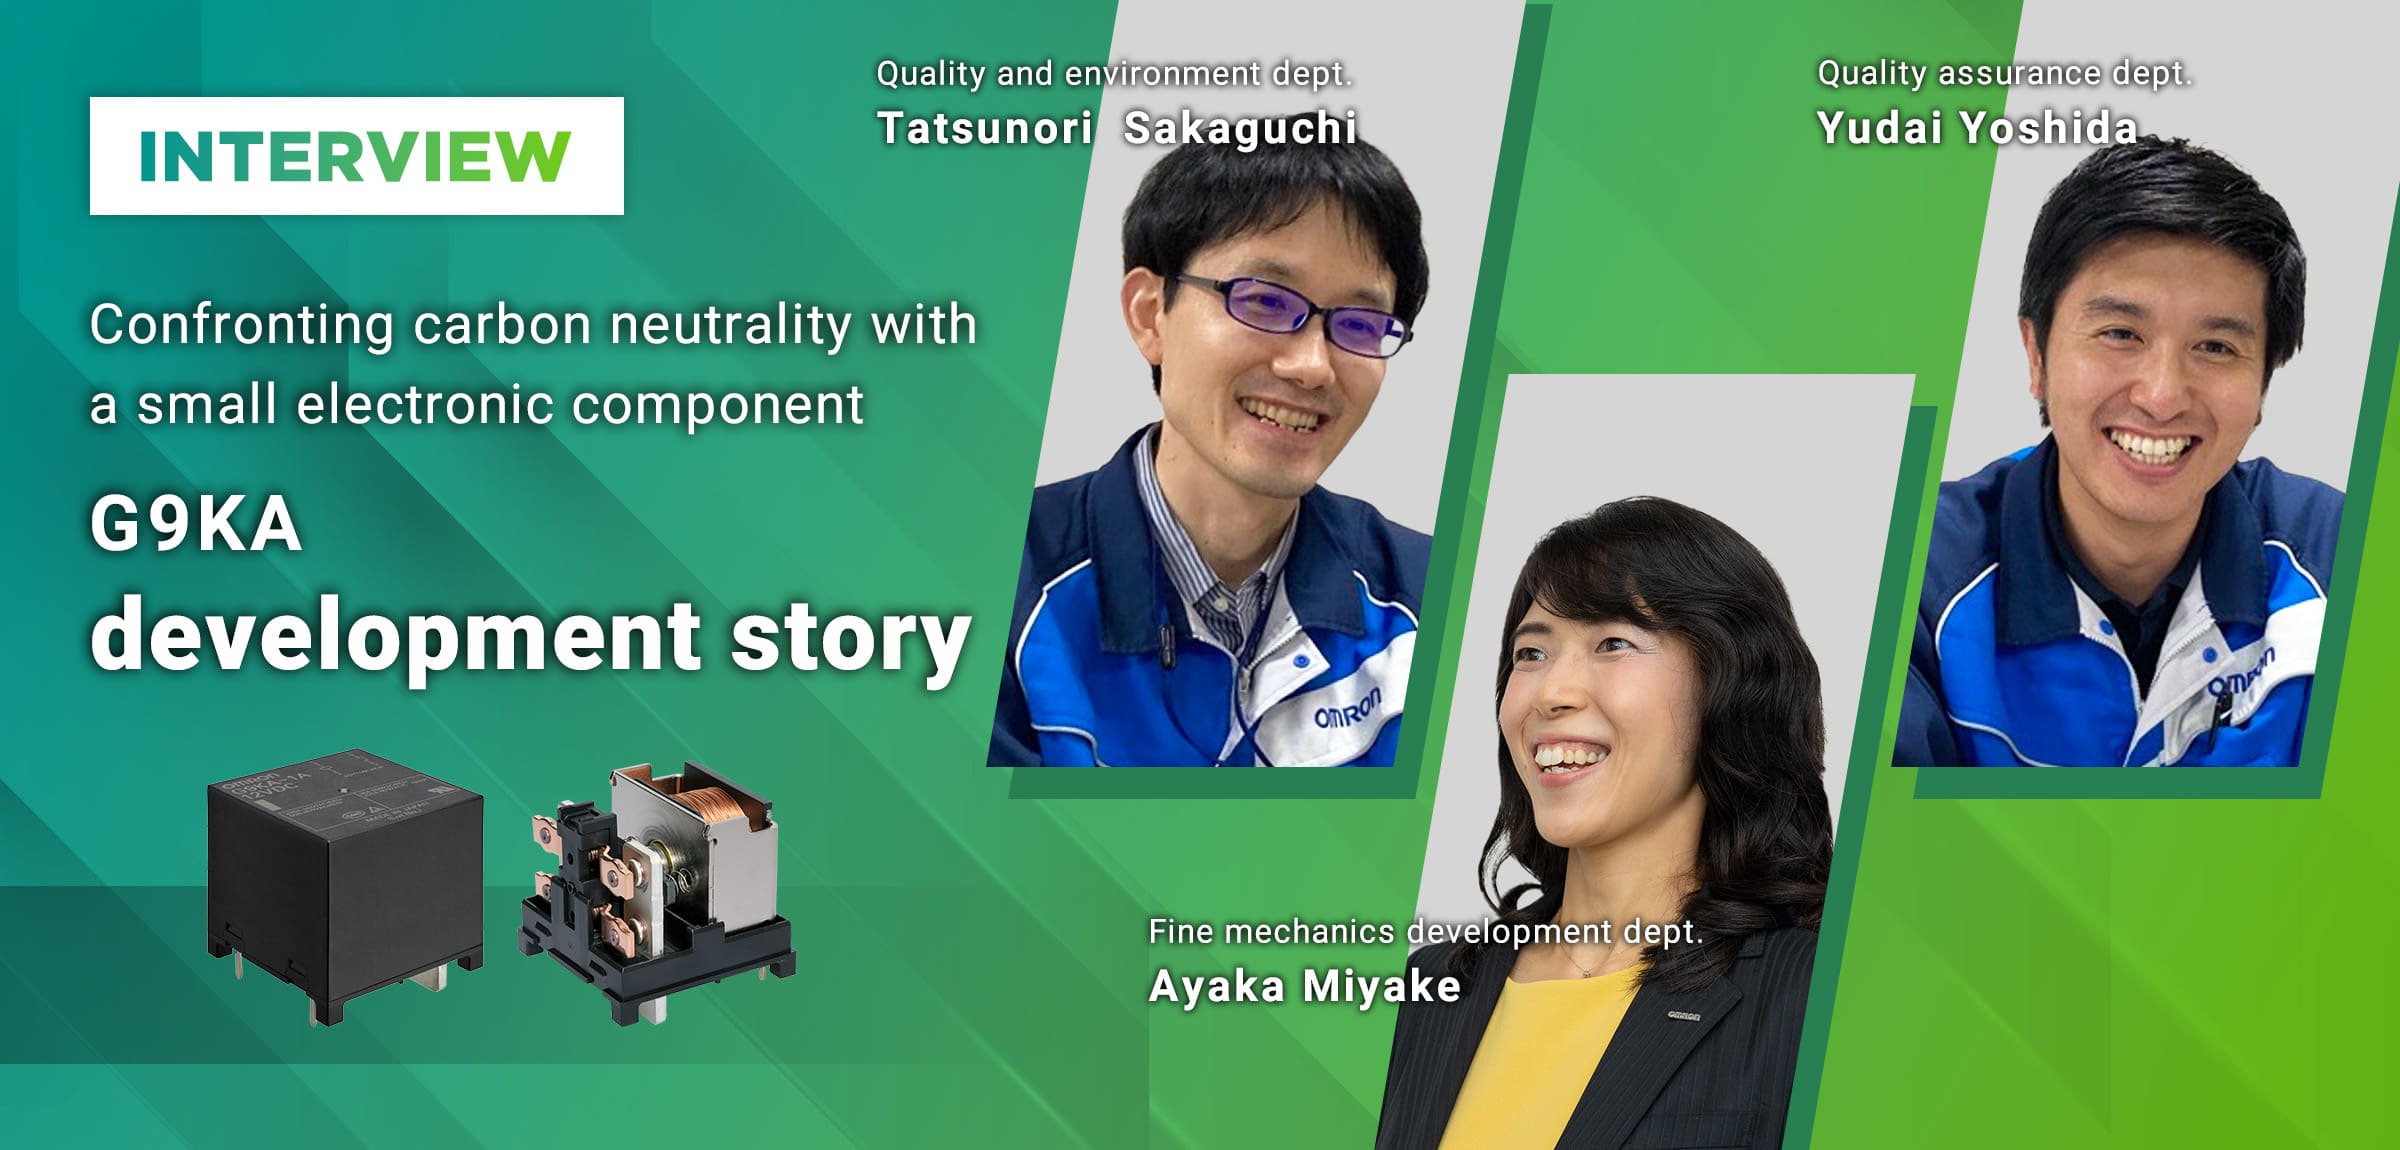 INTERVIEW:Confronting carbon neutrality with a small electronic component G9KA development story(Quality and environment dept.:Tatsunori Sakaguchi, Quality assurance dept.:Yudai Yoshida, Fine mechanics development dept.:Ayaka Miyake)